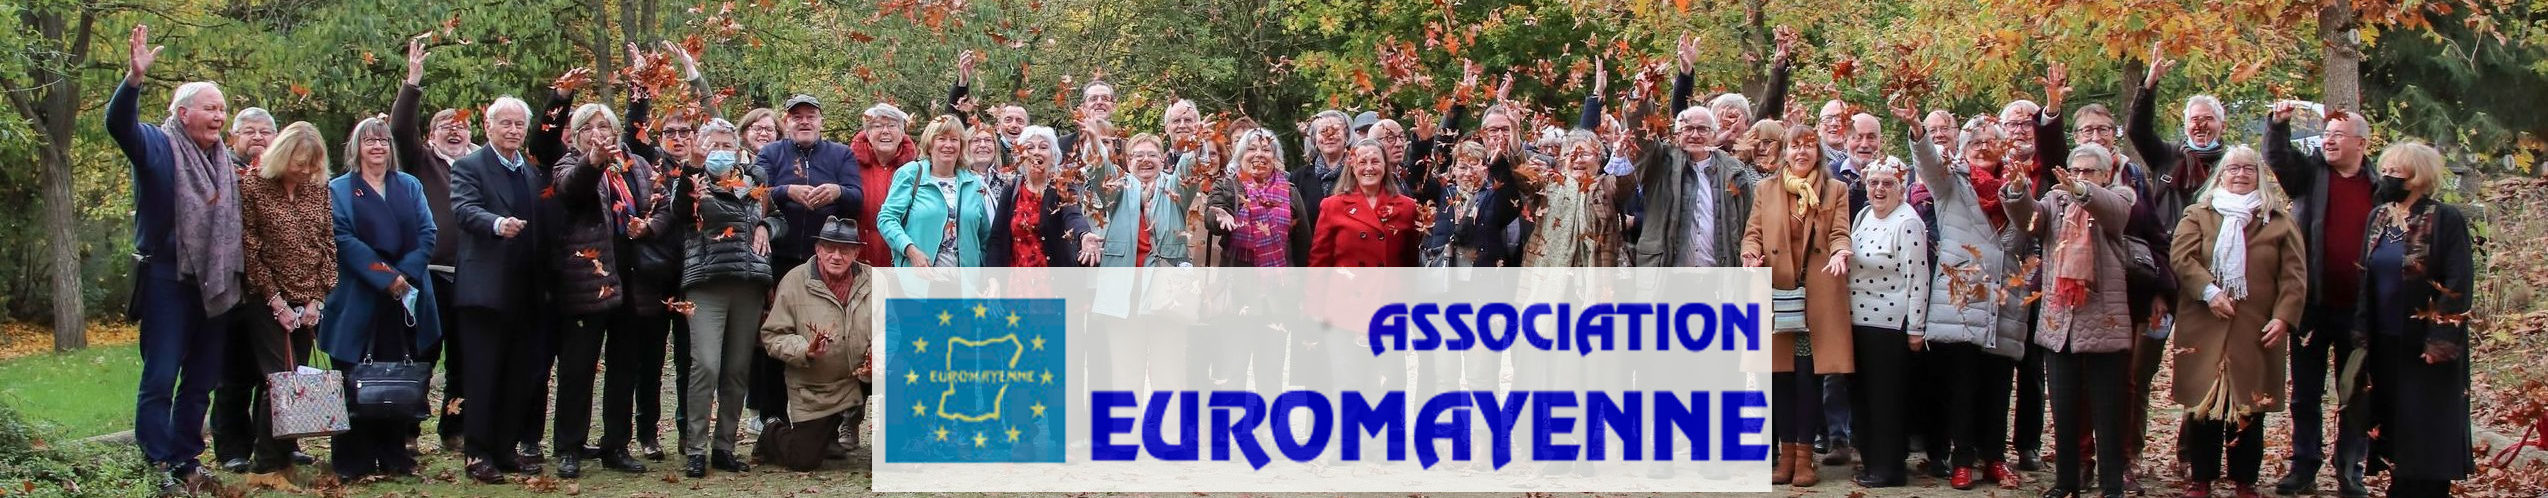 Association EuroMayenne